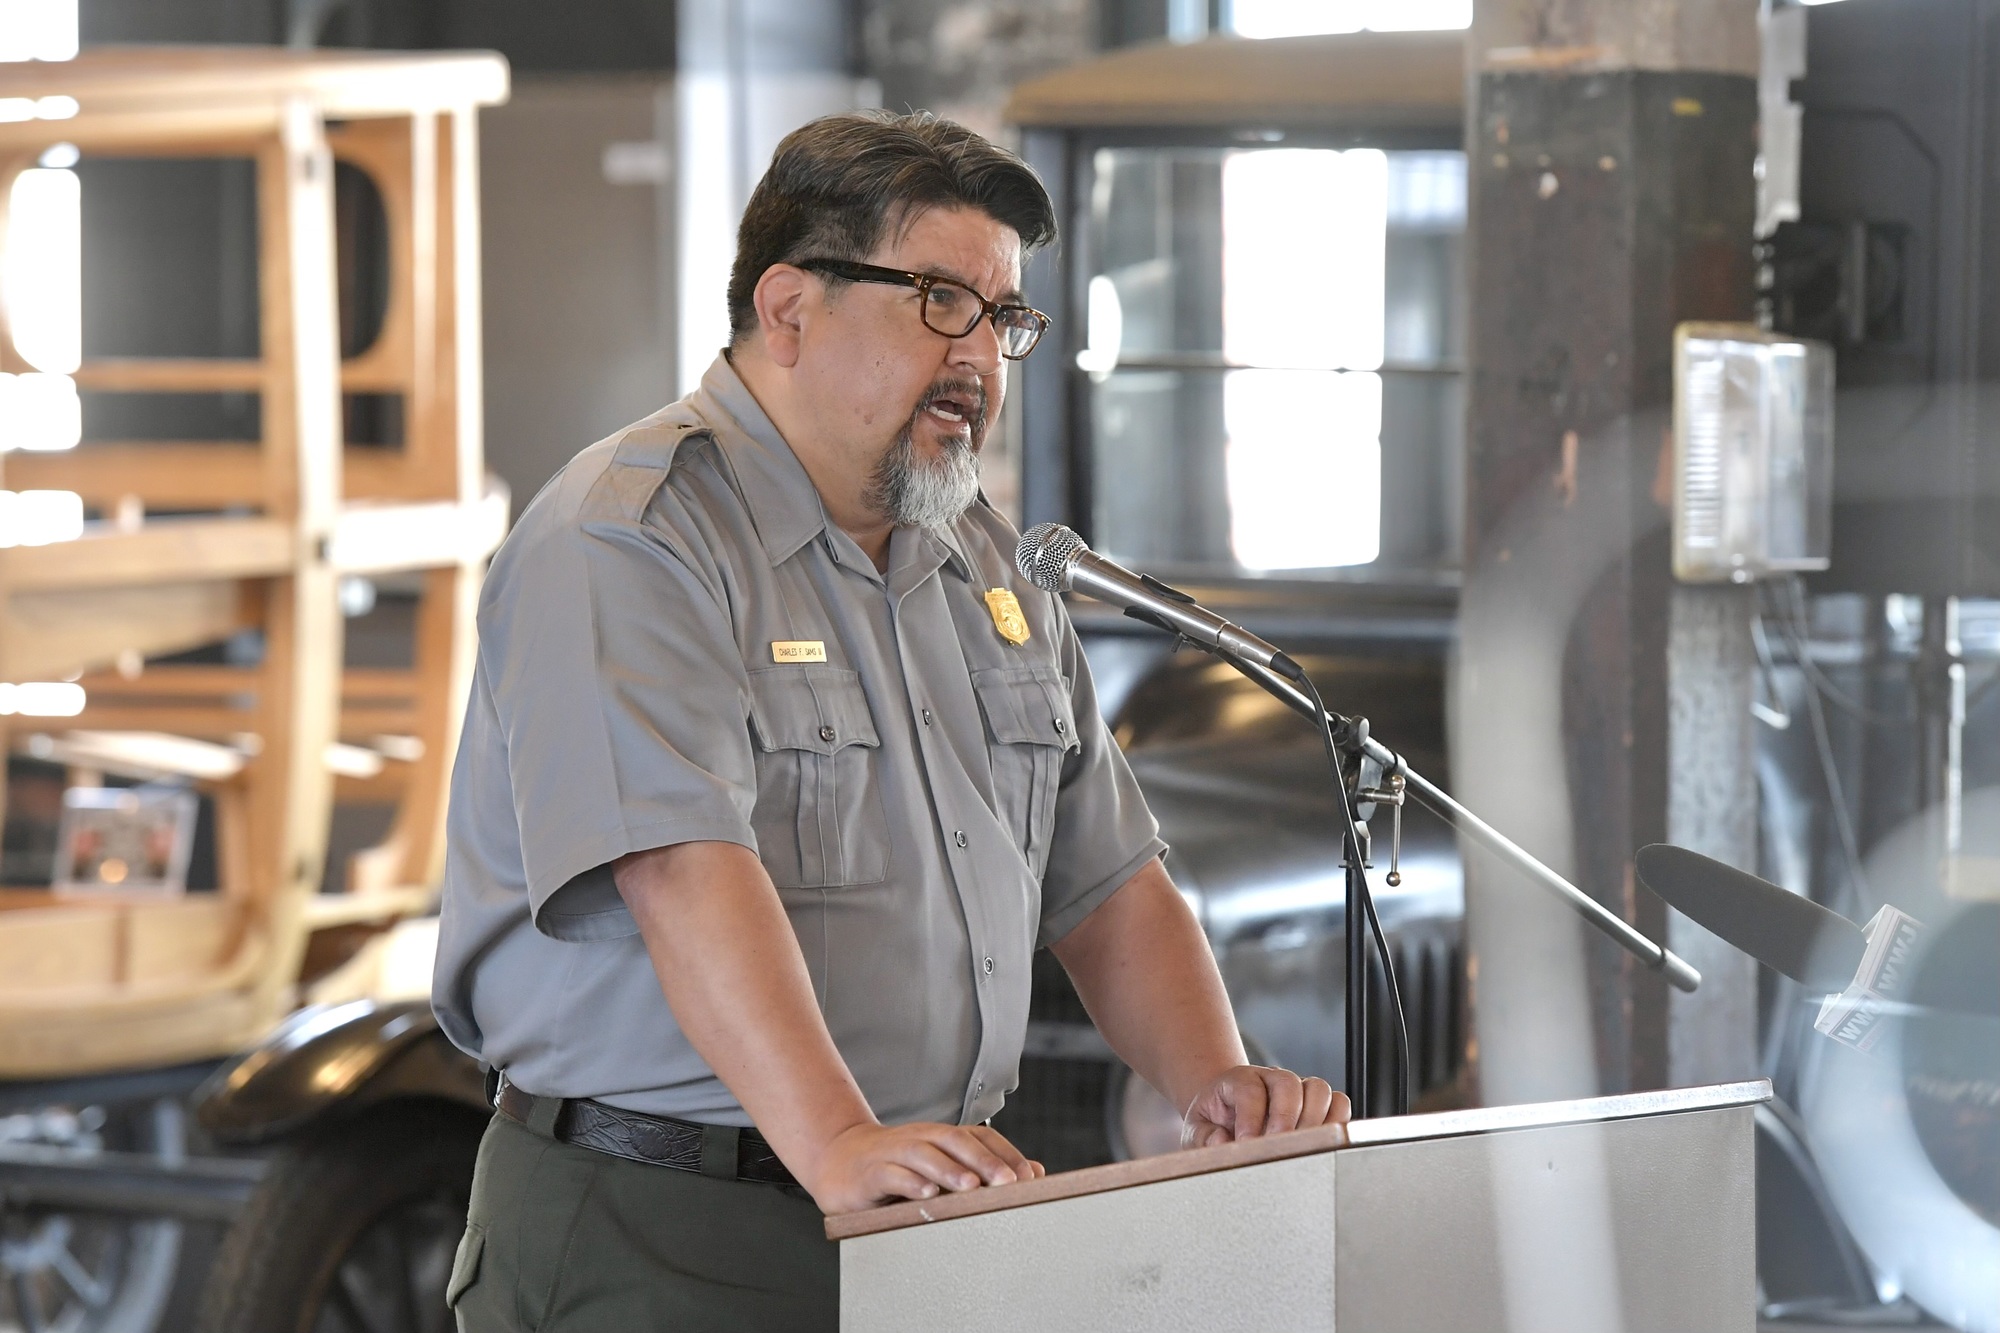 National Park Service Director Chuck Sams